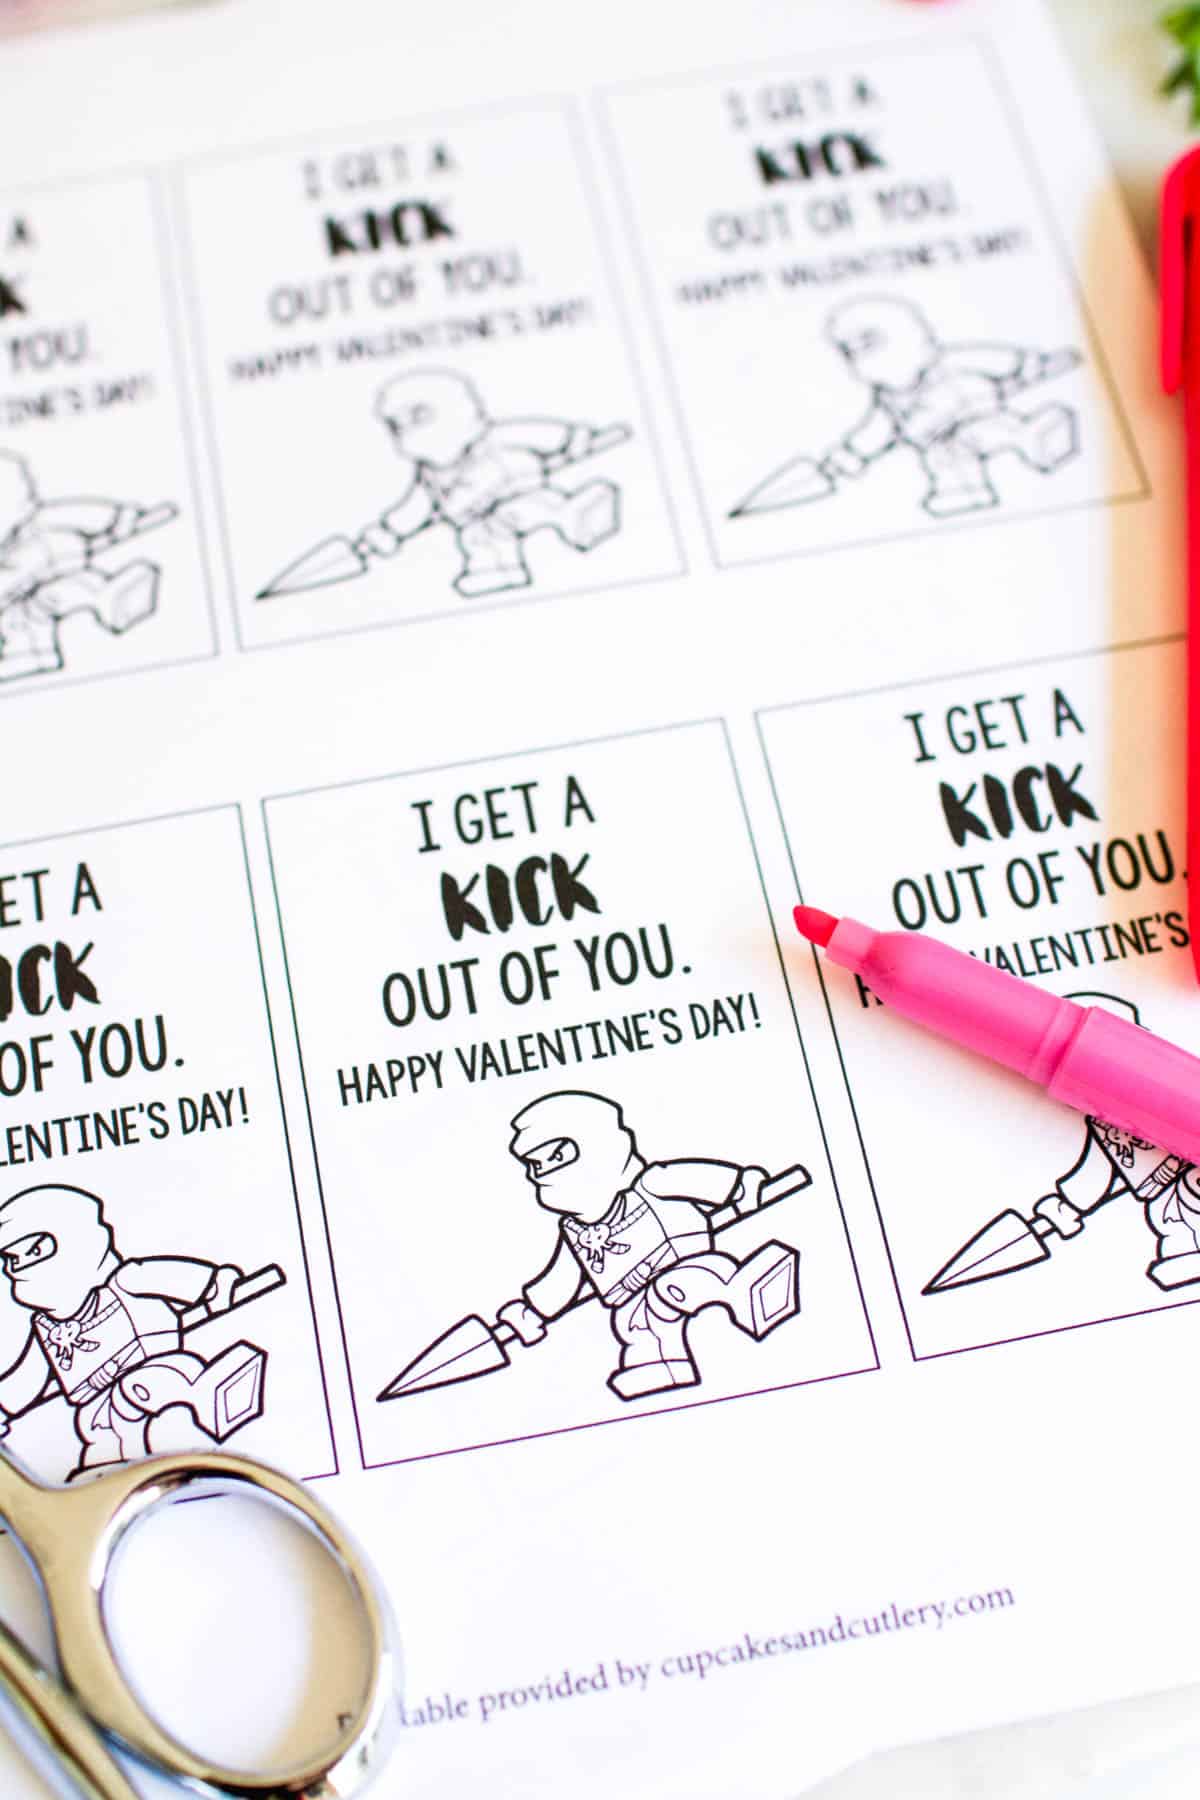 Ninjago printable Valentine's on a table.